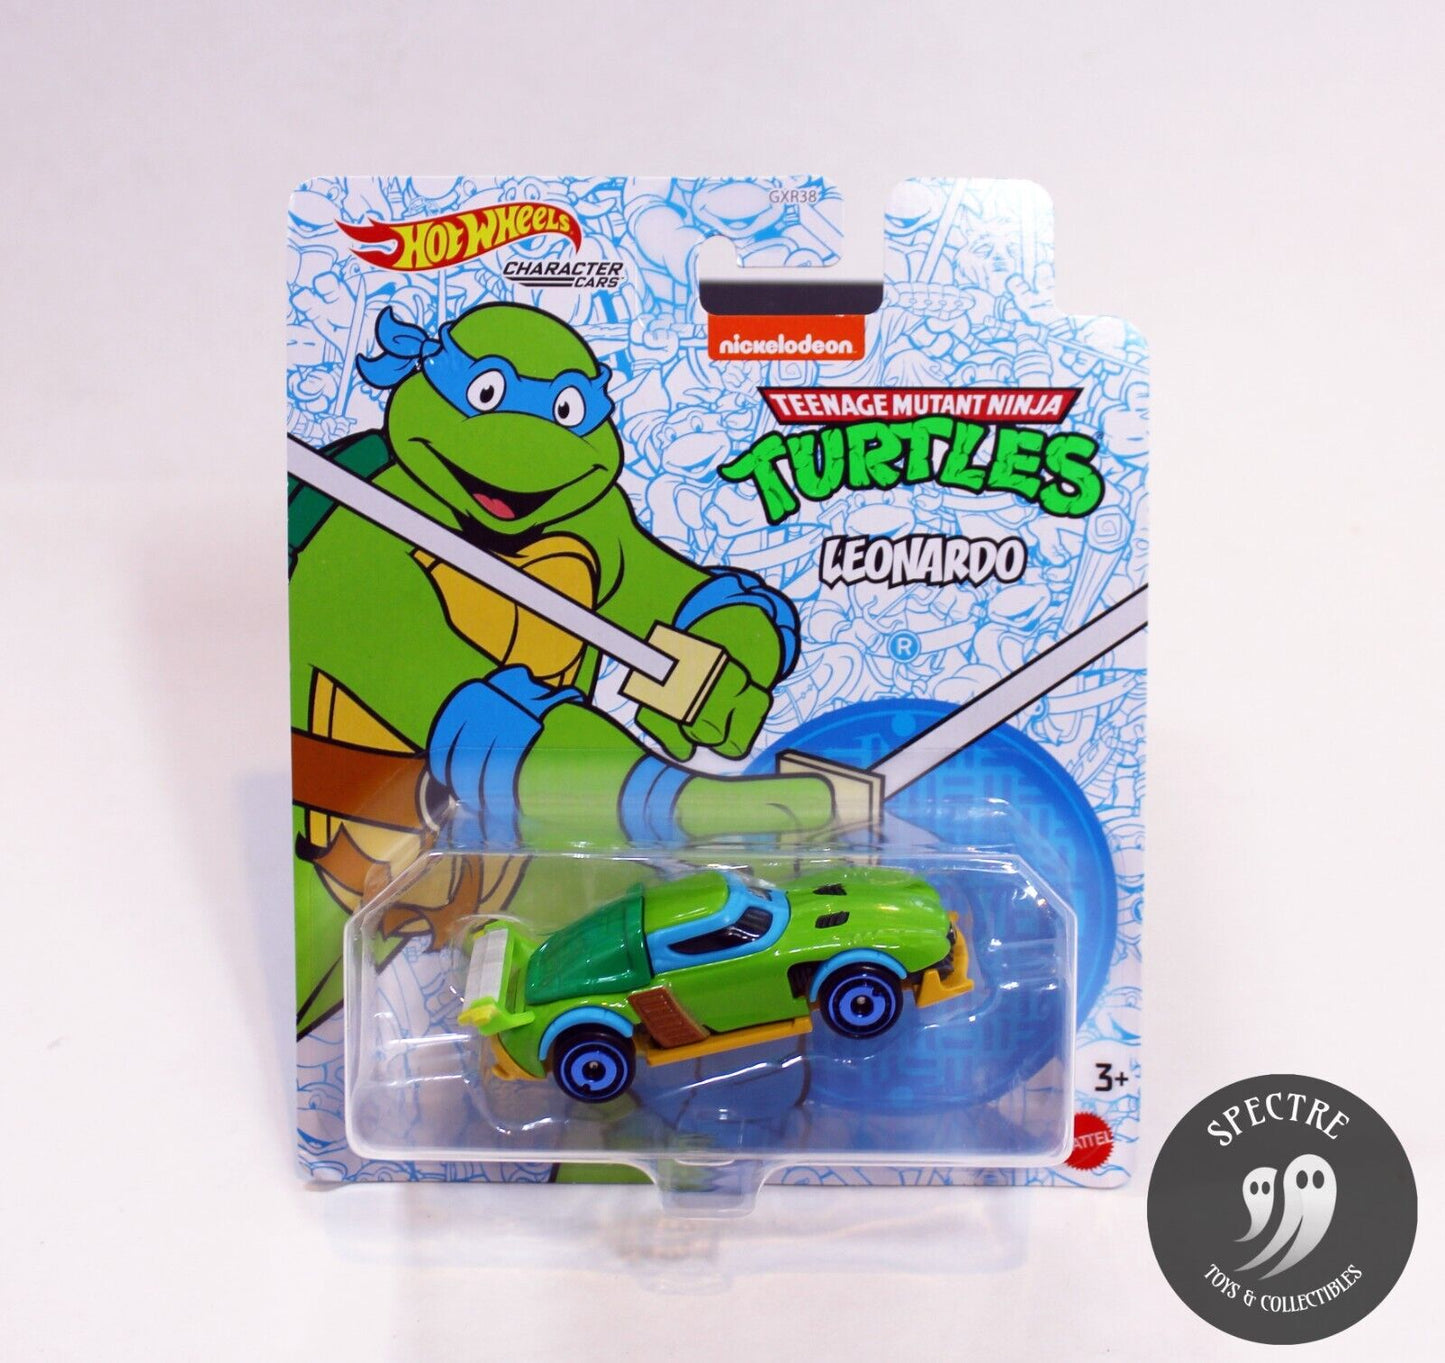 Hot Wheels TMNT Raphael, Leonardo Character Cars - Mattel 2019